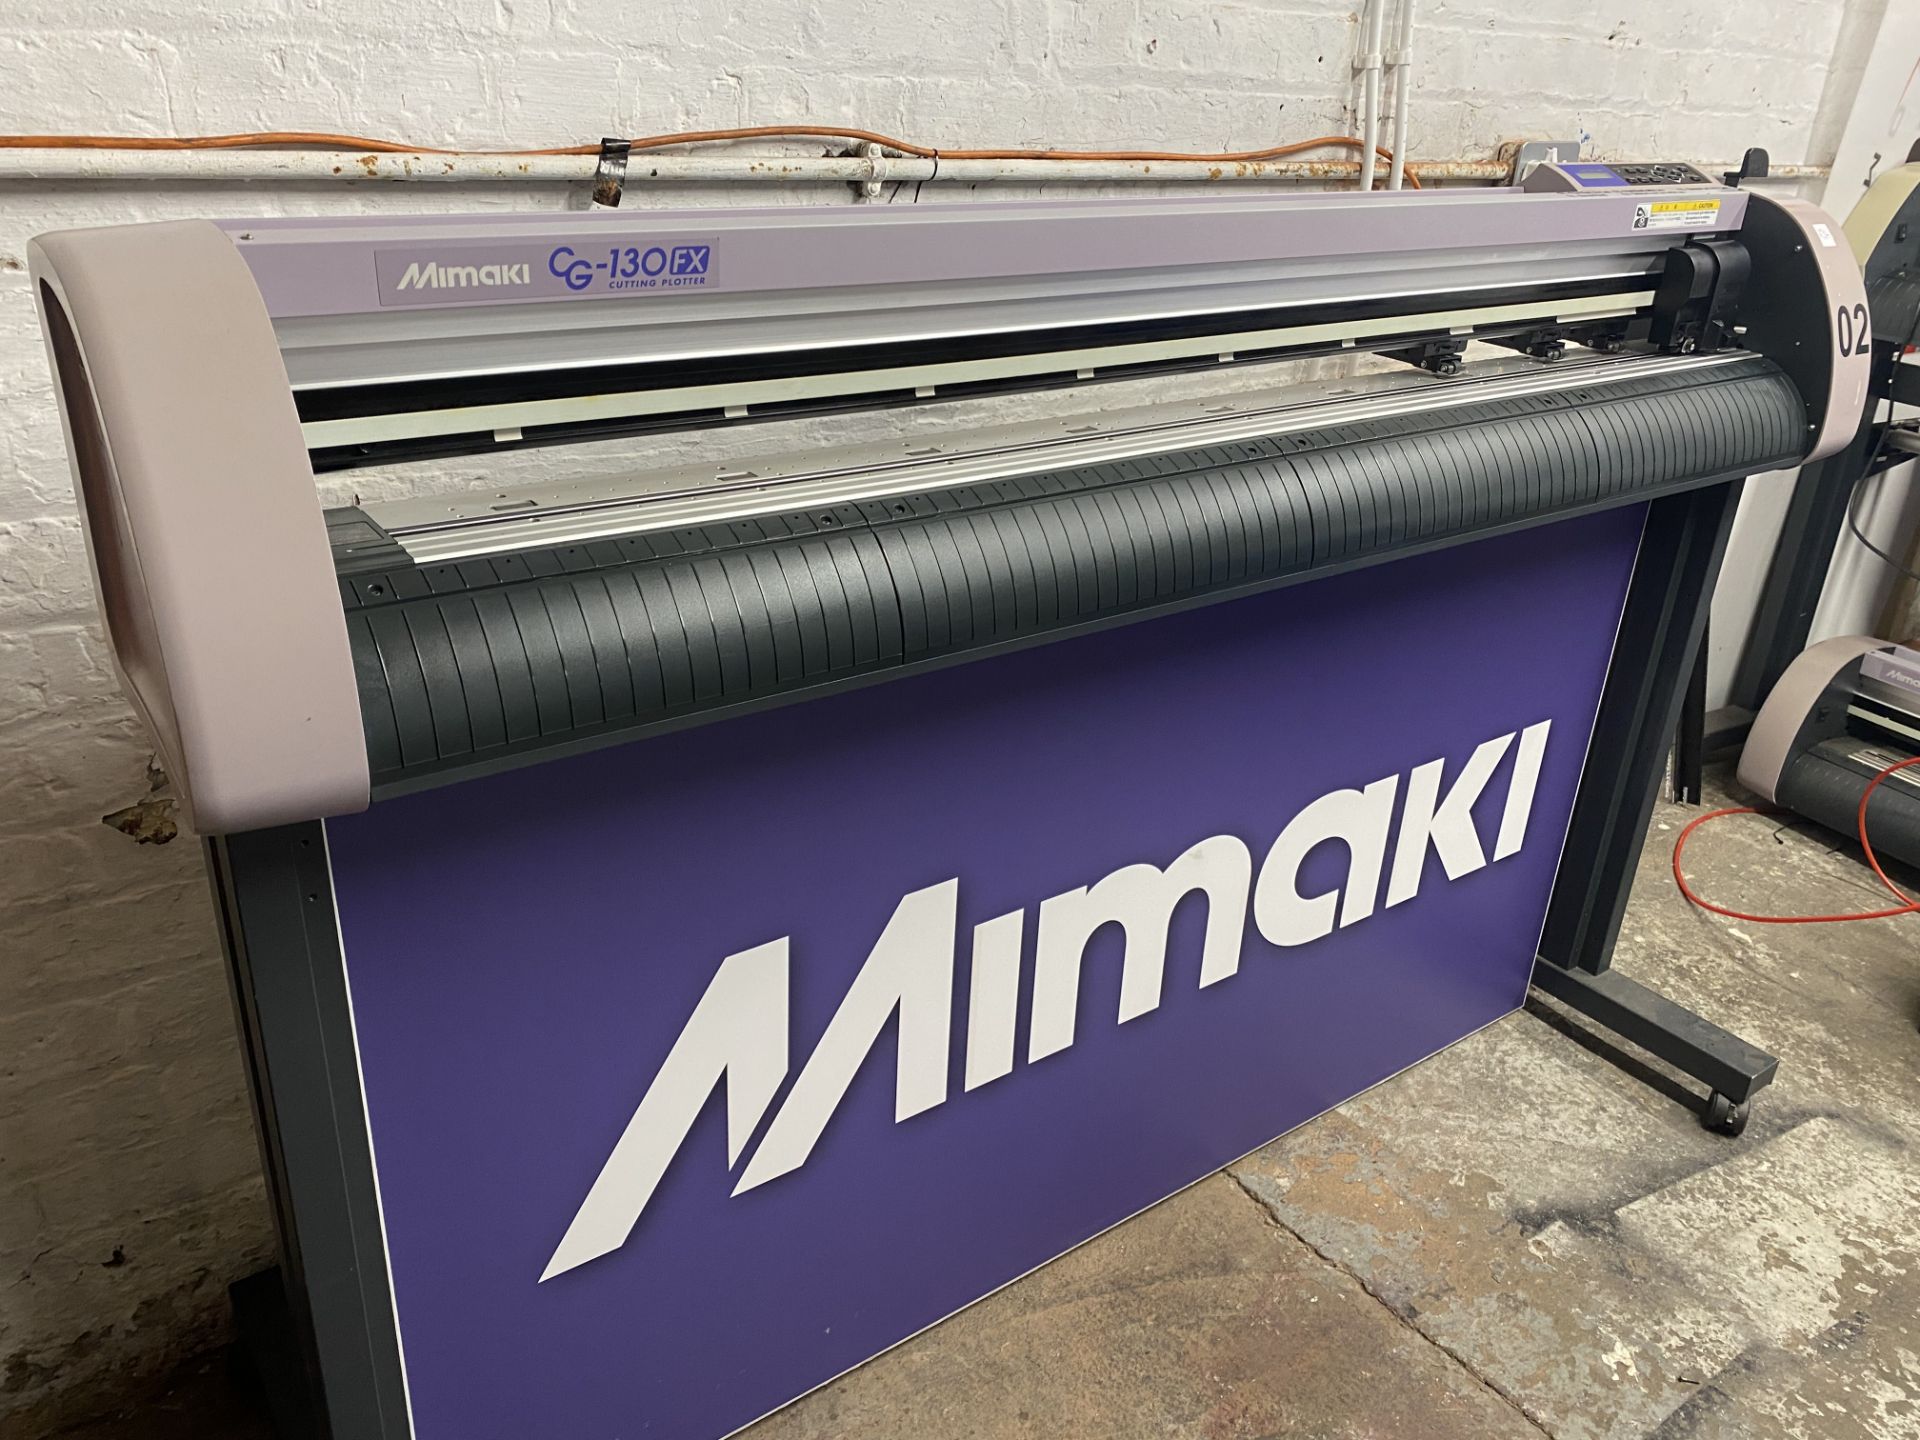 (R34) Mimaki CG-130 FX 1370mm Wide Vinyl Cutter Plotter - Image 3 of 3